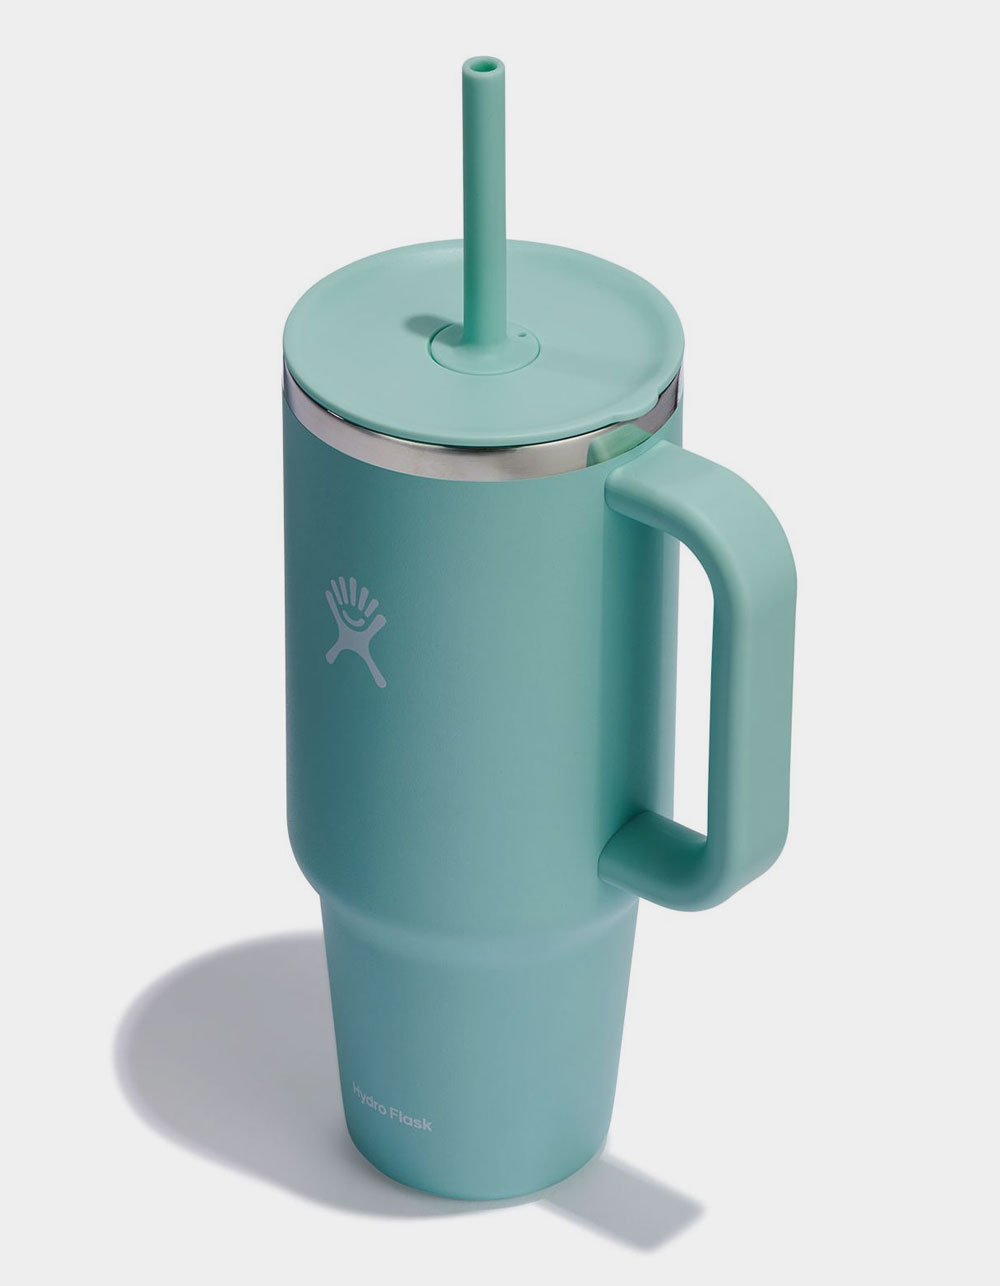 HYDRO FLASK 12 oz Coffee Mug - LUPINE, Tillys, Salesforce Commerce Cloud